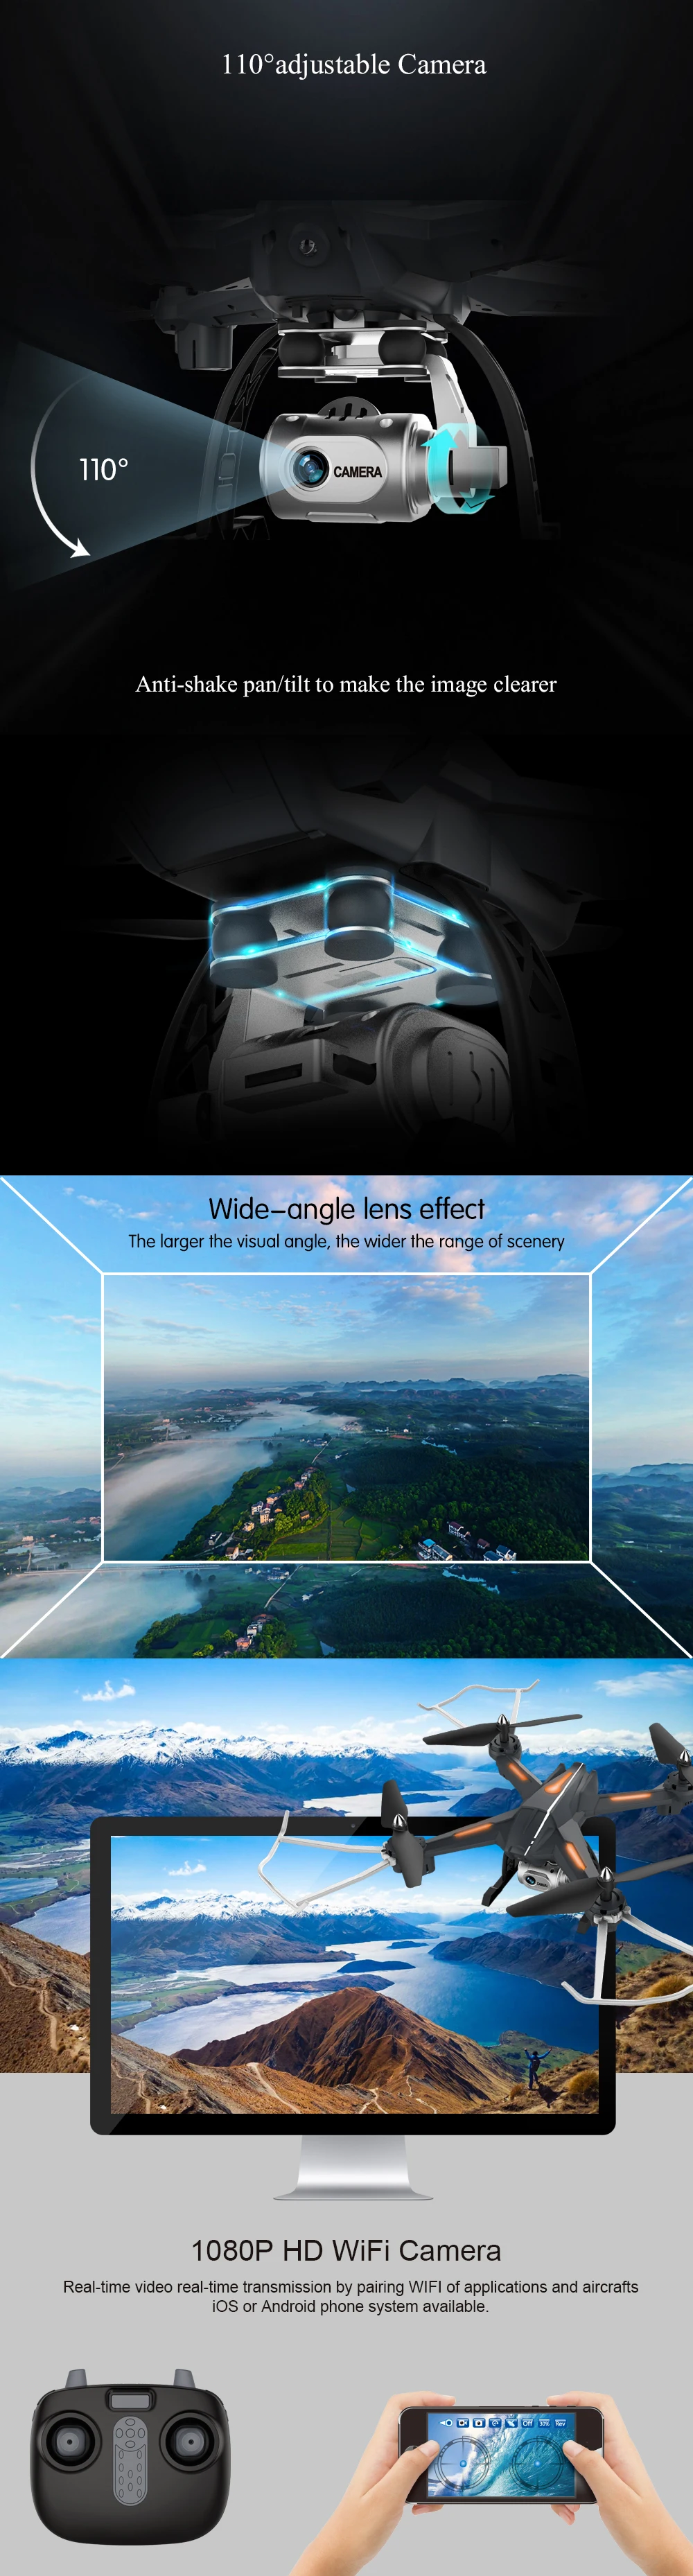 XYCQ XY-S5 камера Дрон Квадрокоптер Wifi FPV HD в режиме реального времени 2,4G 4CH RC вертолет Квадрокоптер RC Дрон игрушка Время полета 15 минут